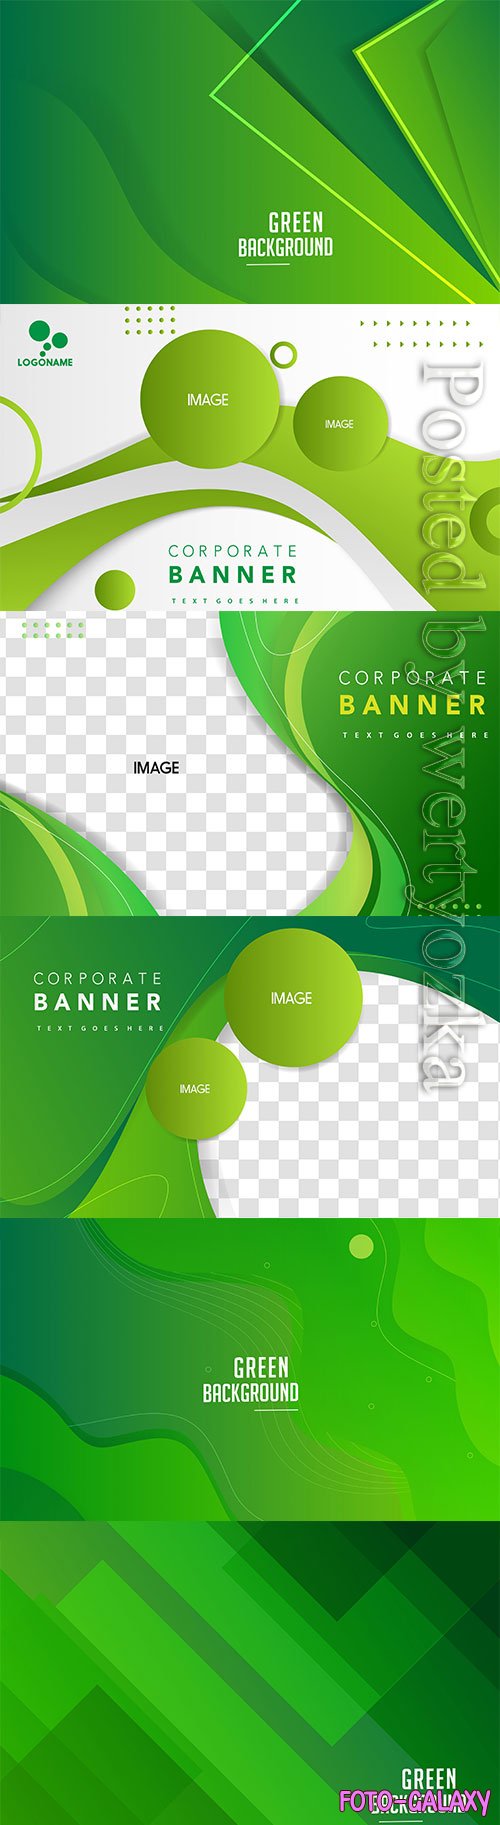 Vector corporate green banner template